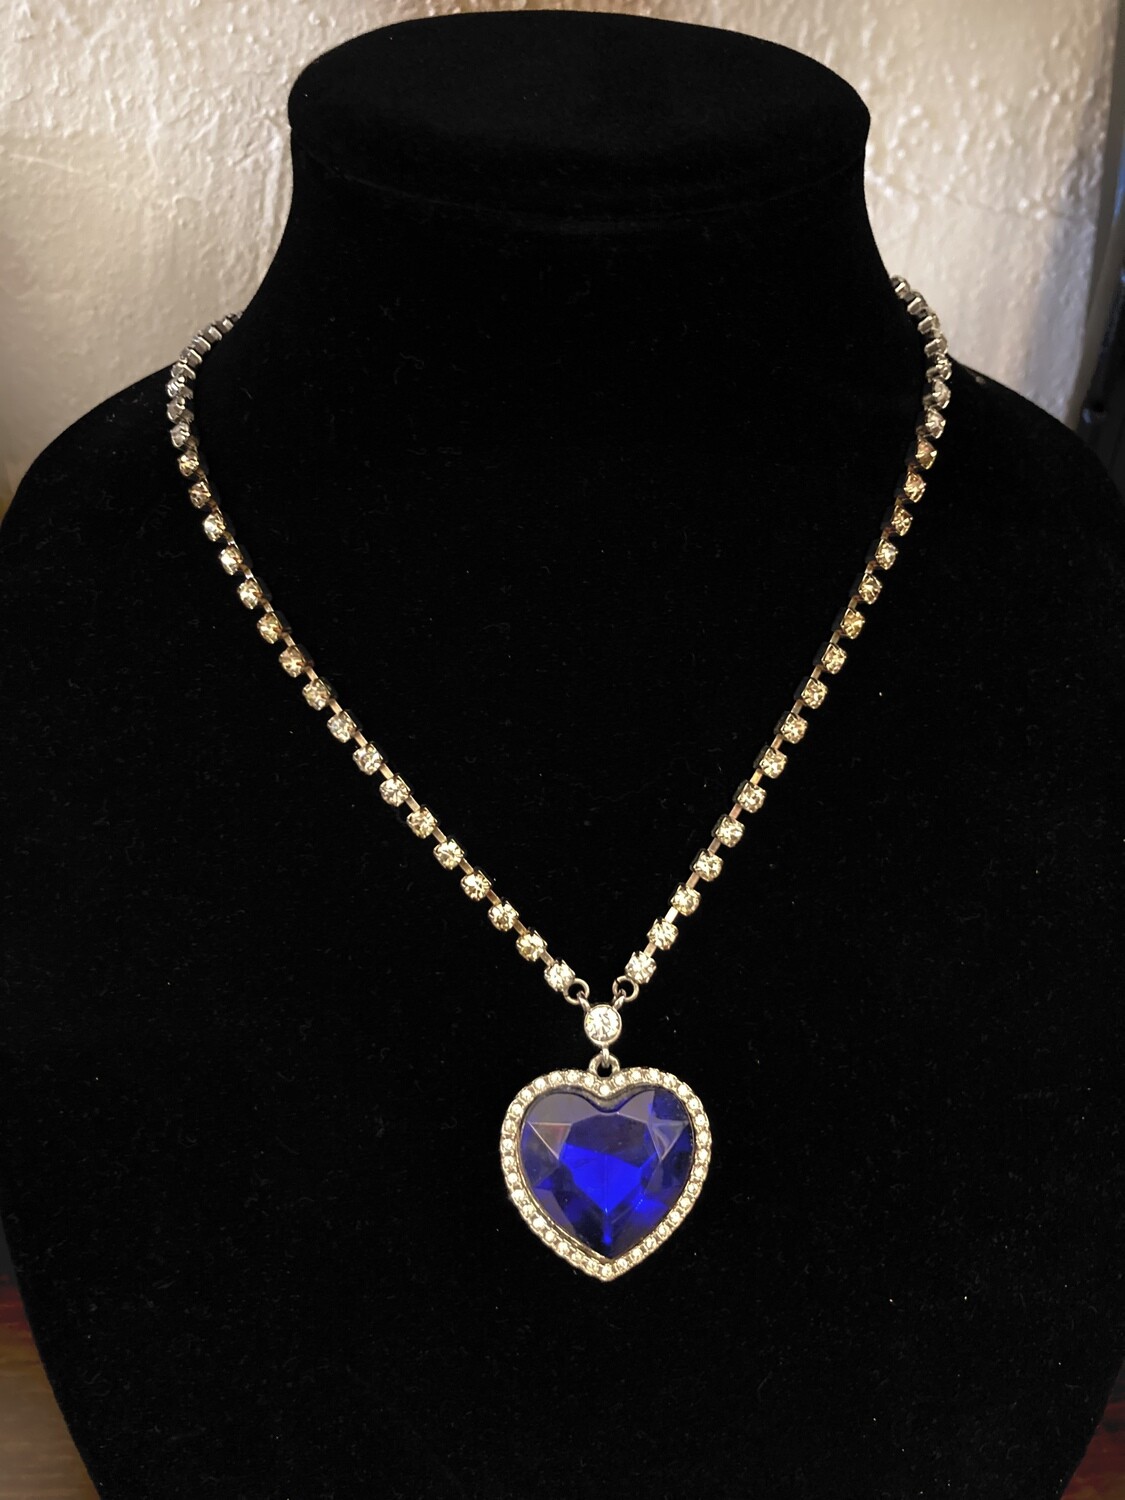 “Heart of the Ocean” Titanic Necklace Replica